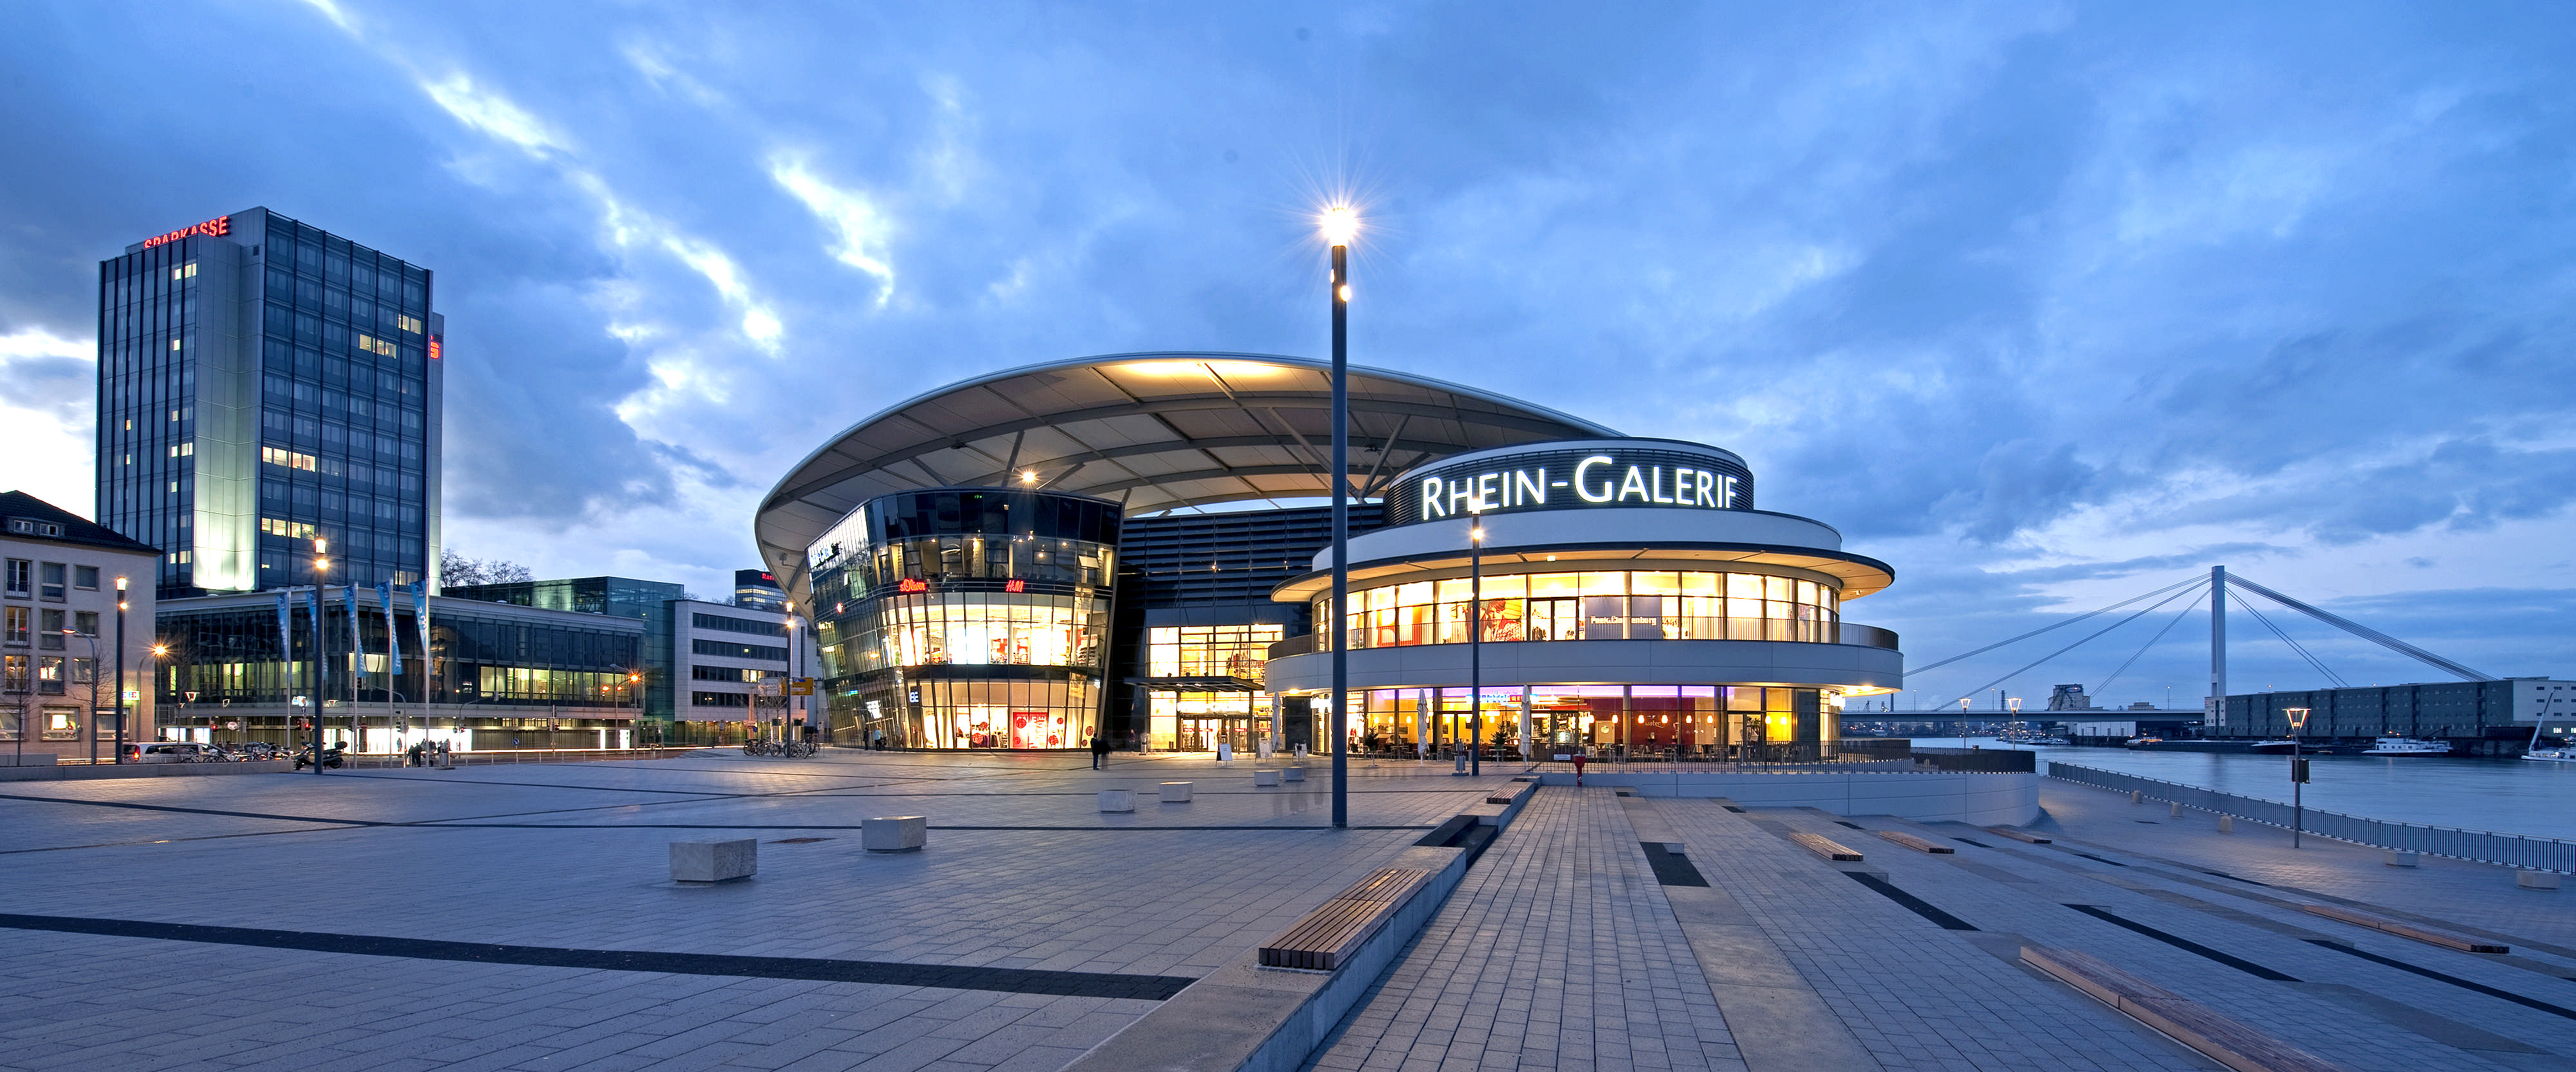 Rheingalerie Mall, Ludwigshafen, Germany